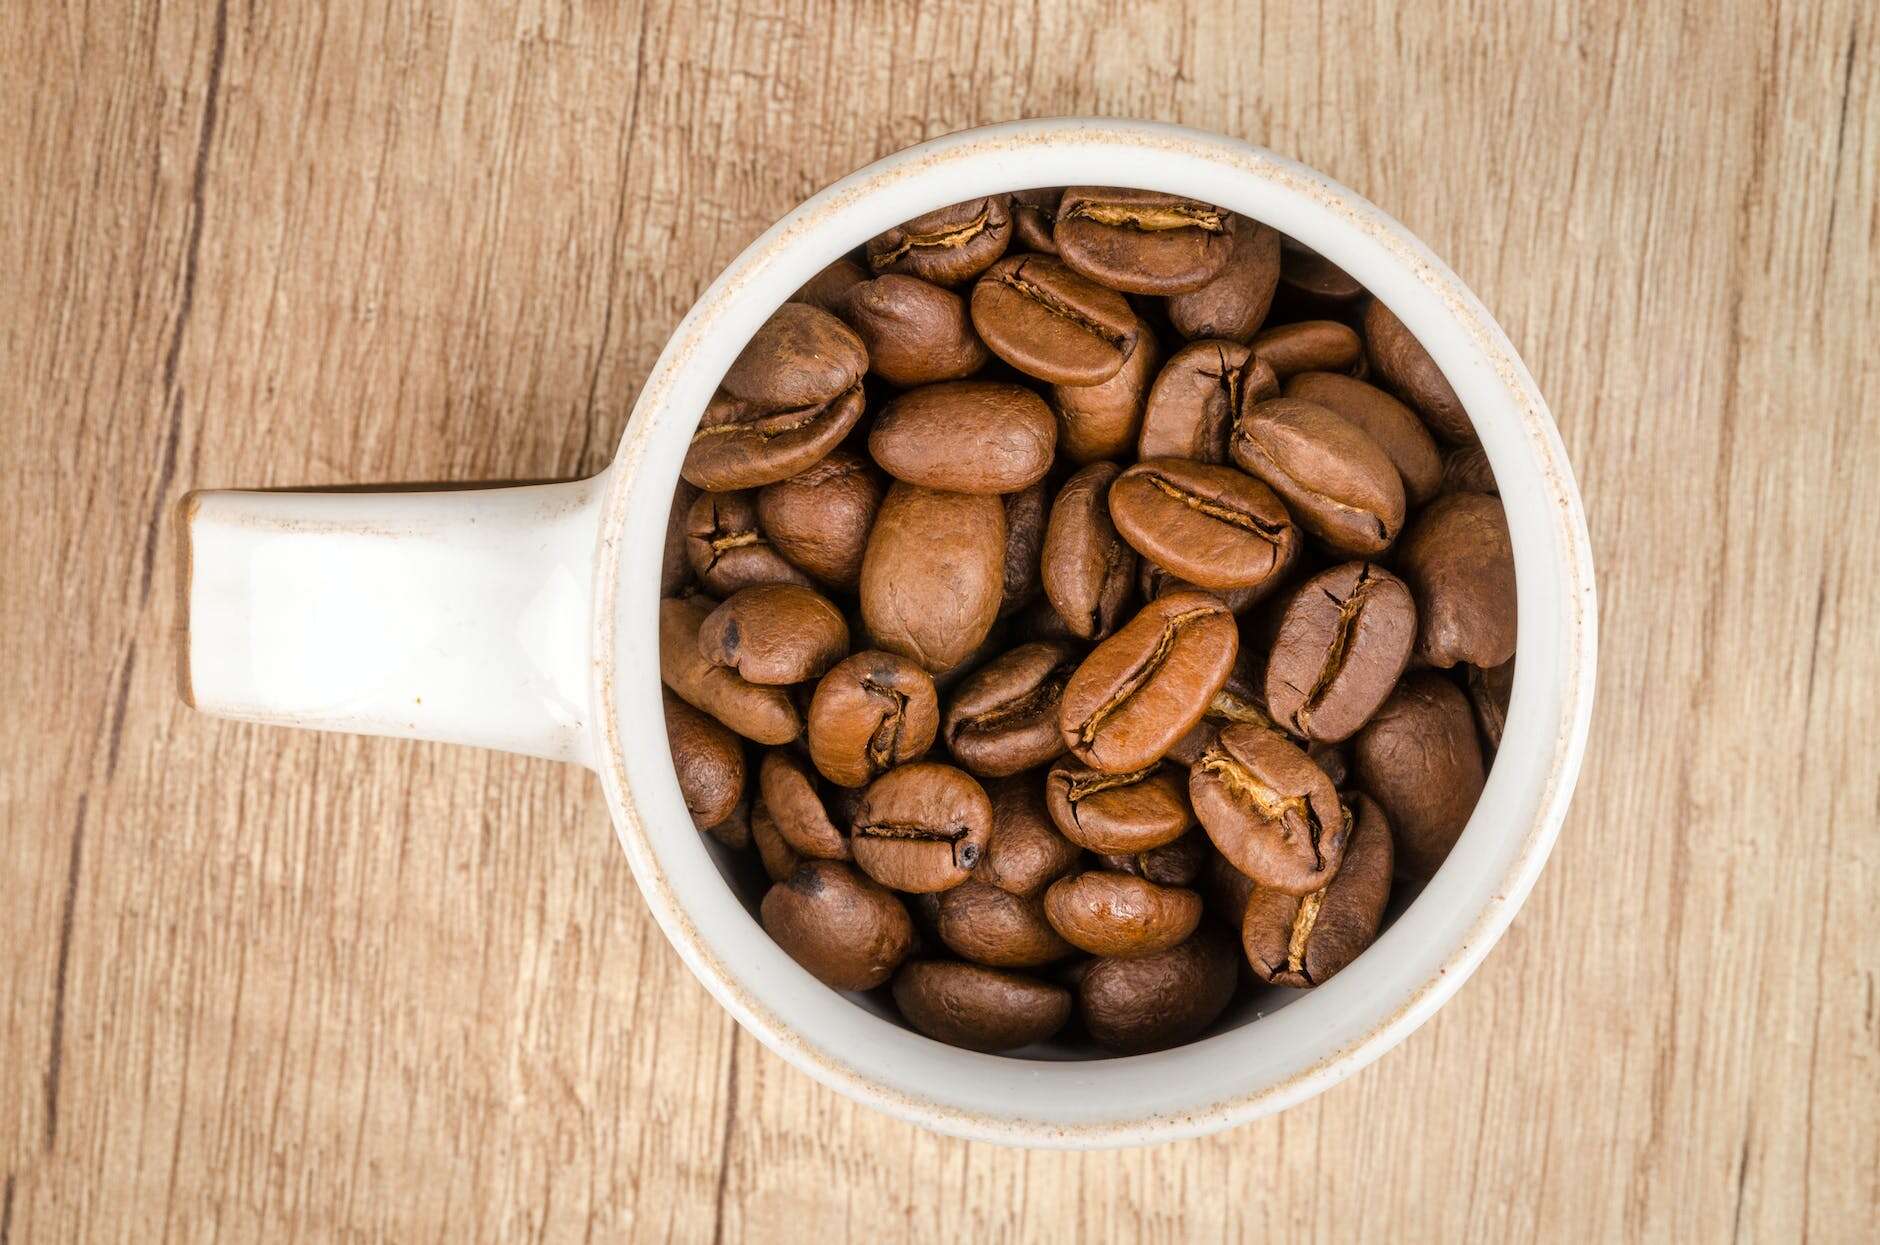 roasted coffee beans inside white ceramic mug